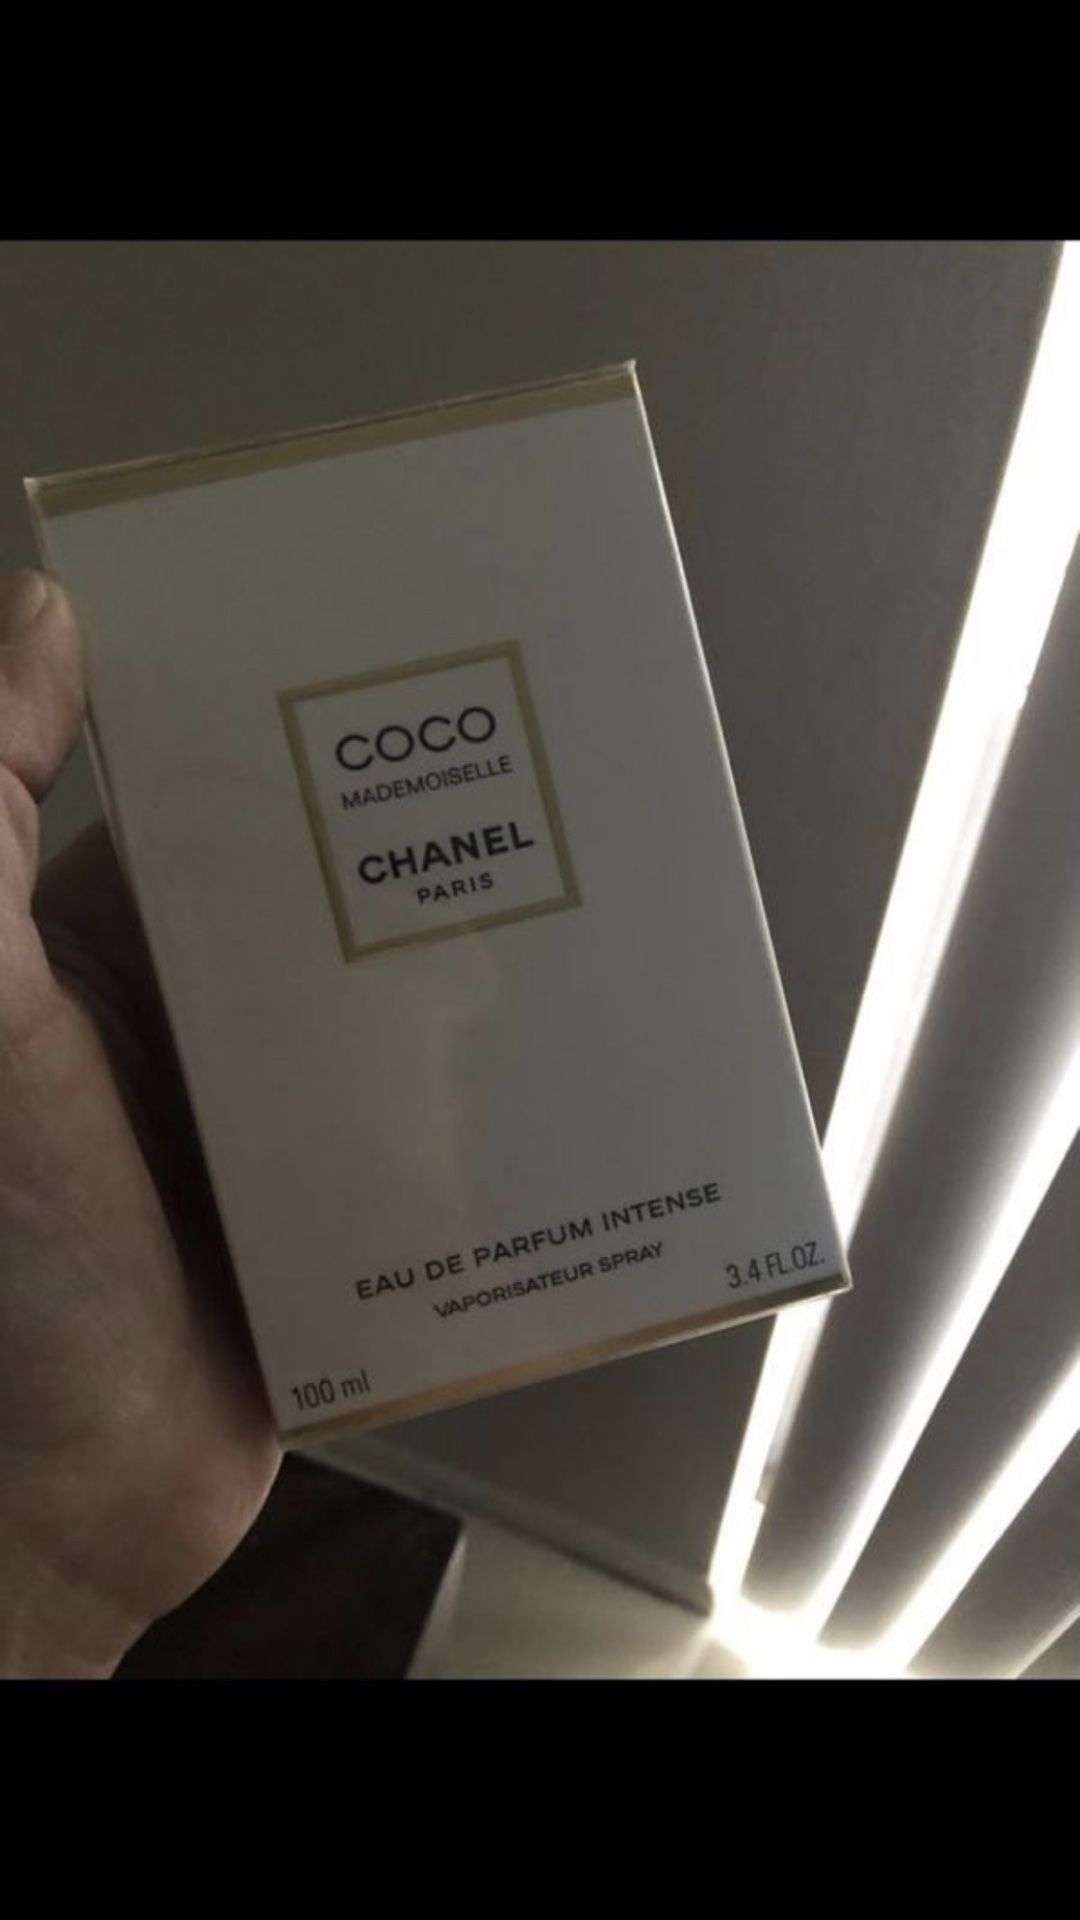 Chanel 3.4 Mademoiselle Intense Perfume $130 sealed ( kendall fl )